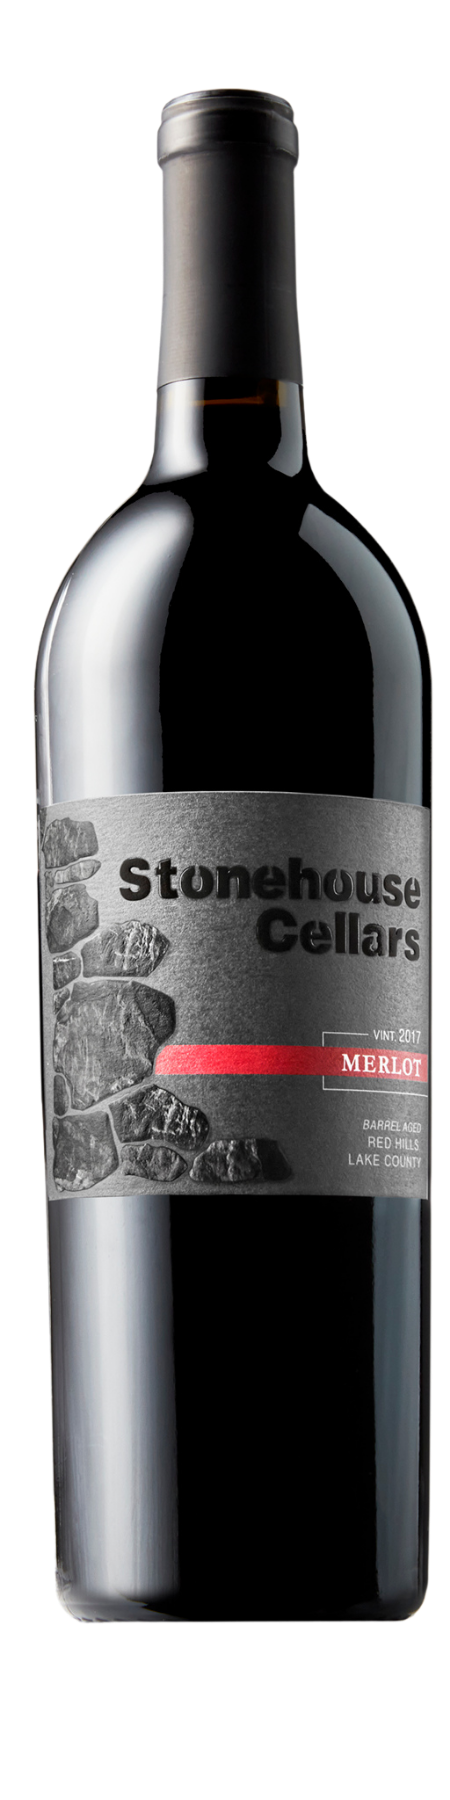 stonehouse cellars Merlot